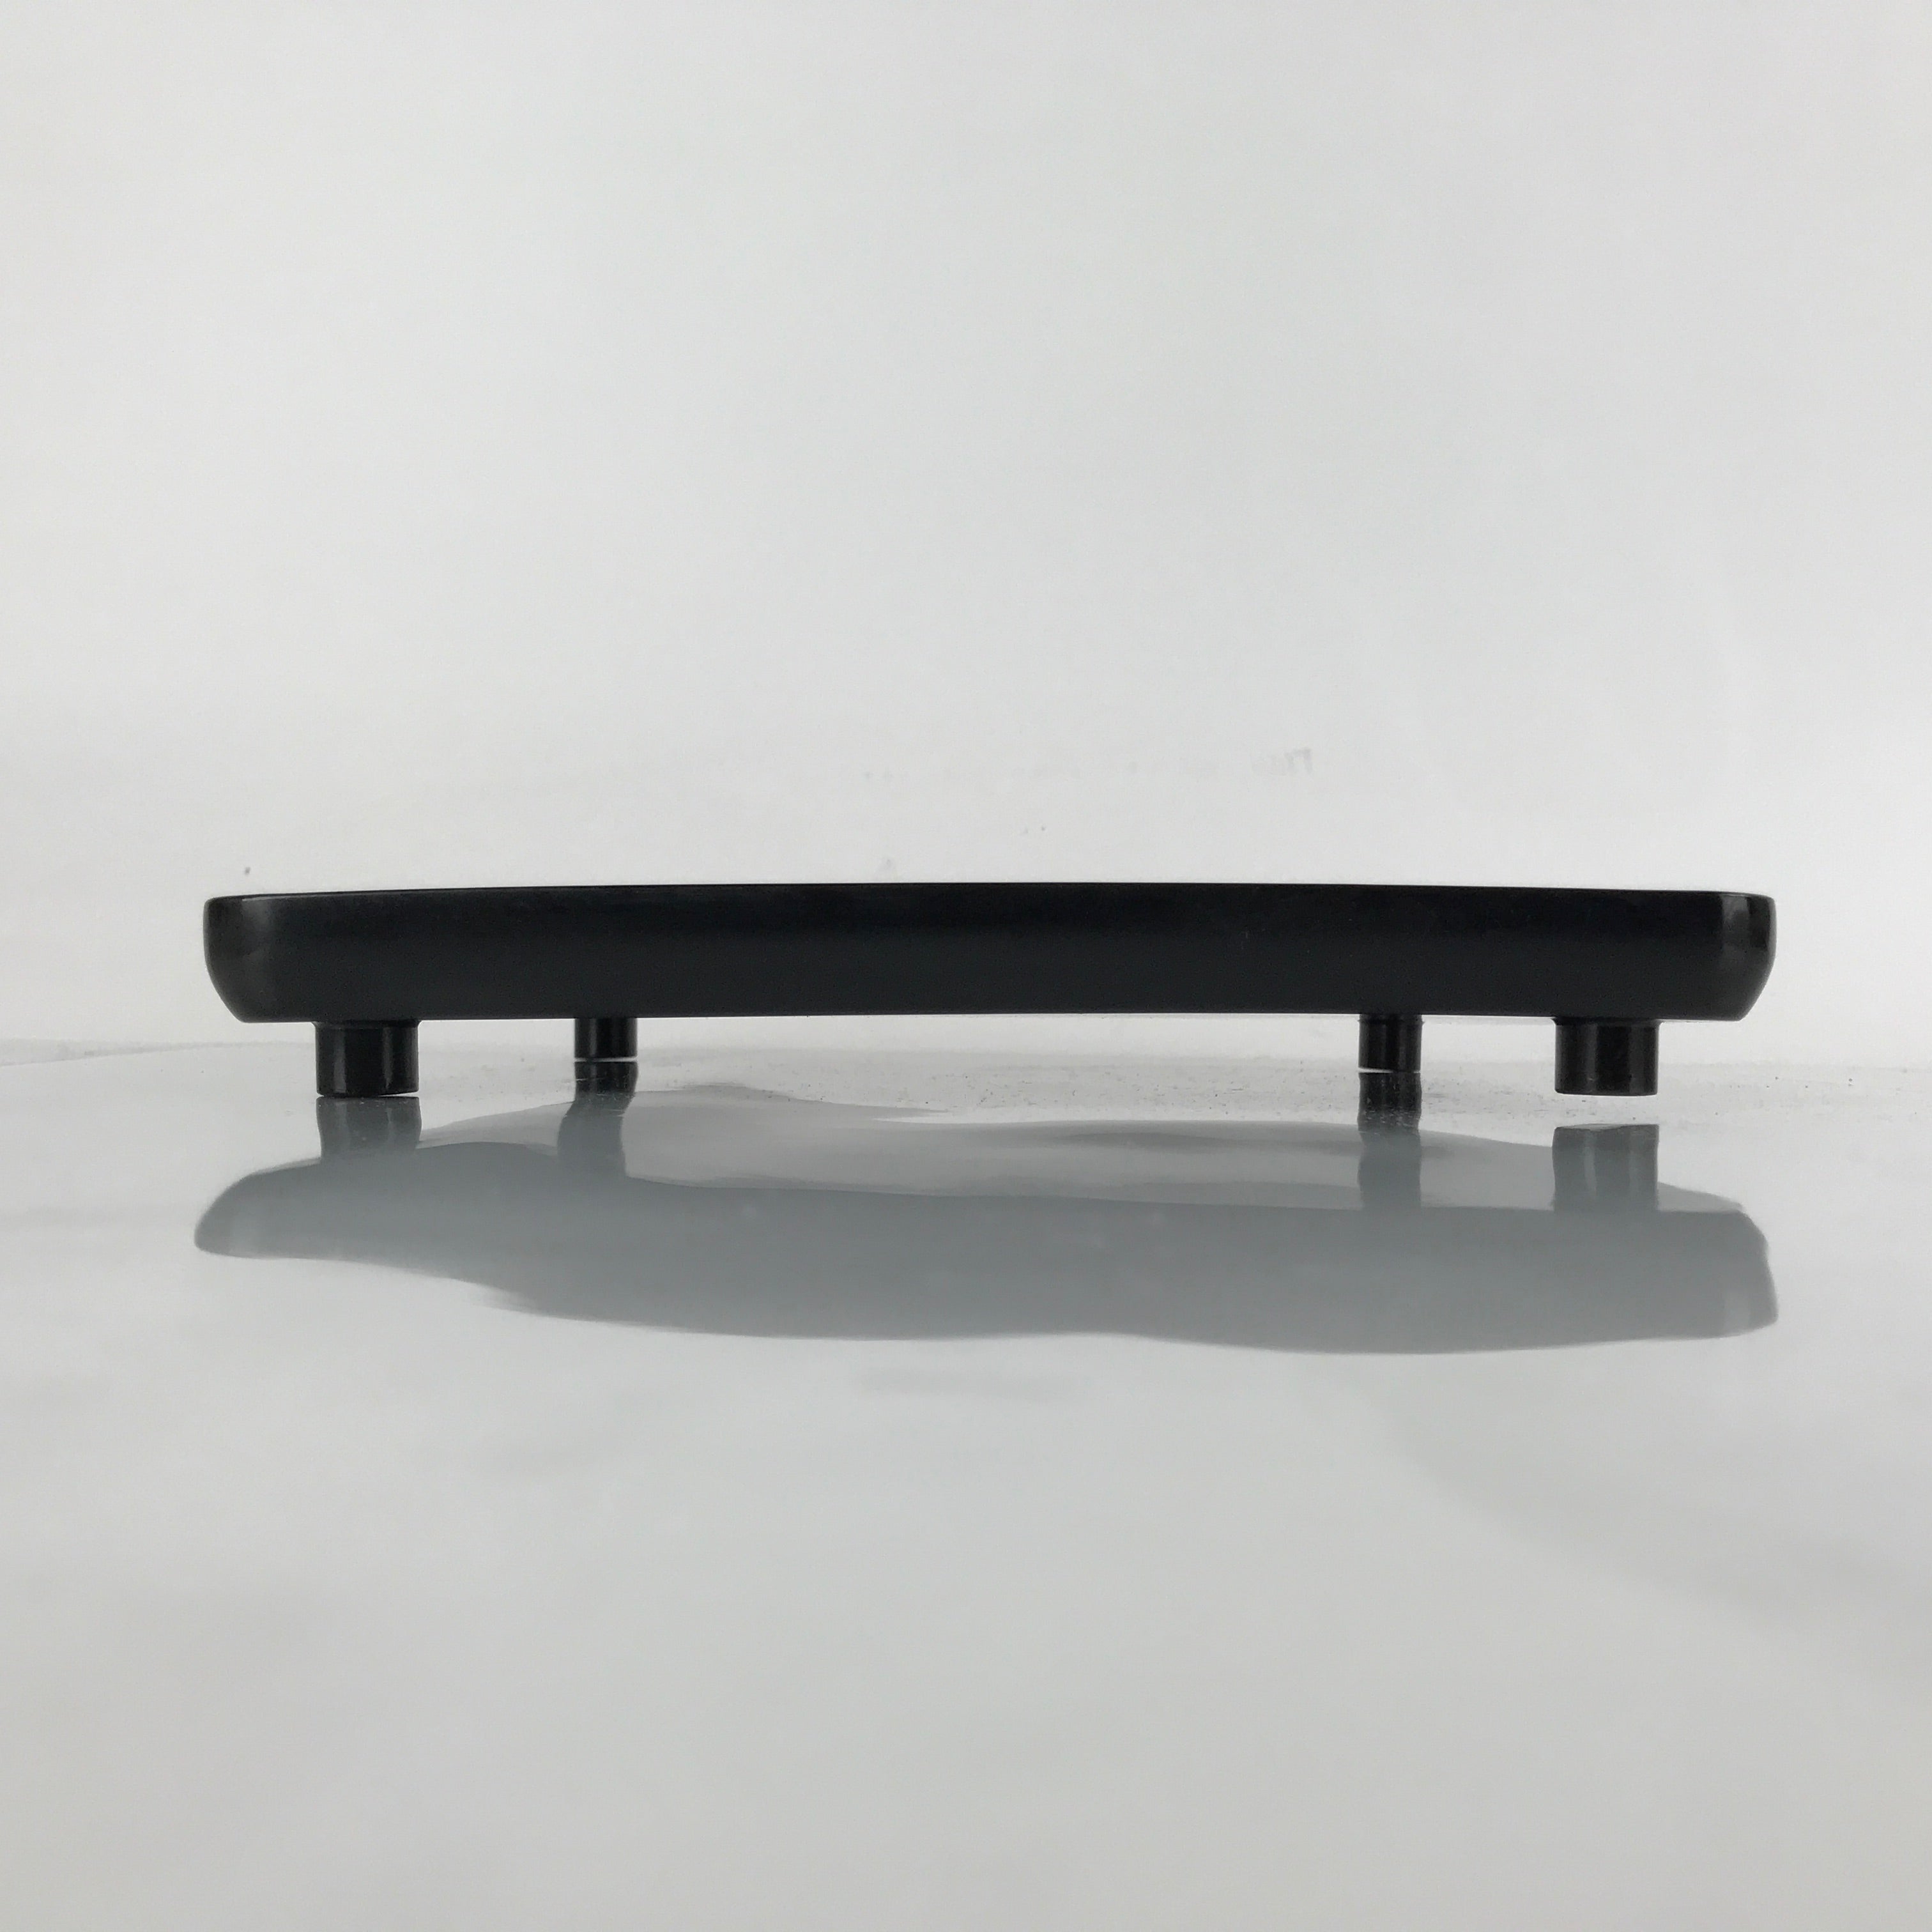 Japanese Wooden Lacquered Legged Table Vtg Ozen Tray Black Nurimono L248